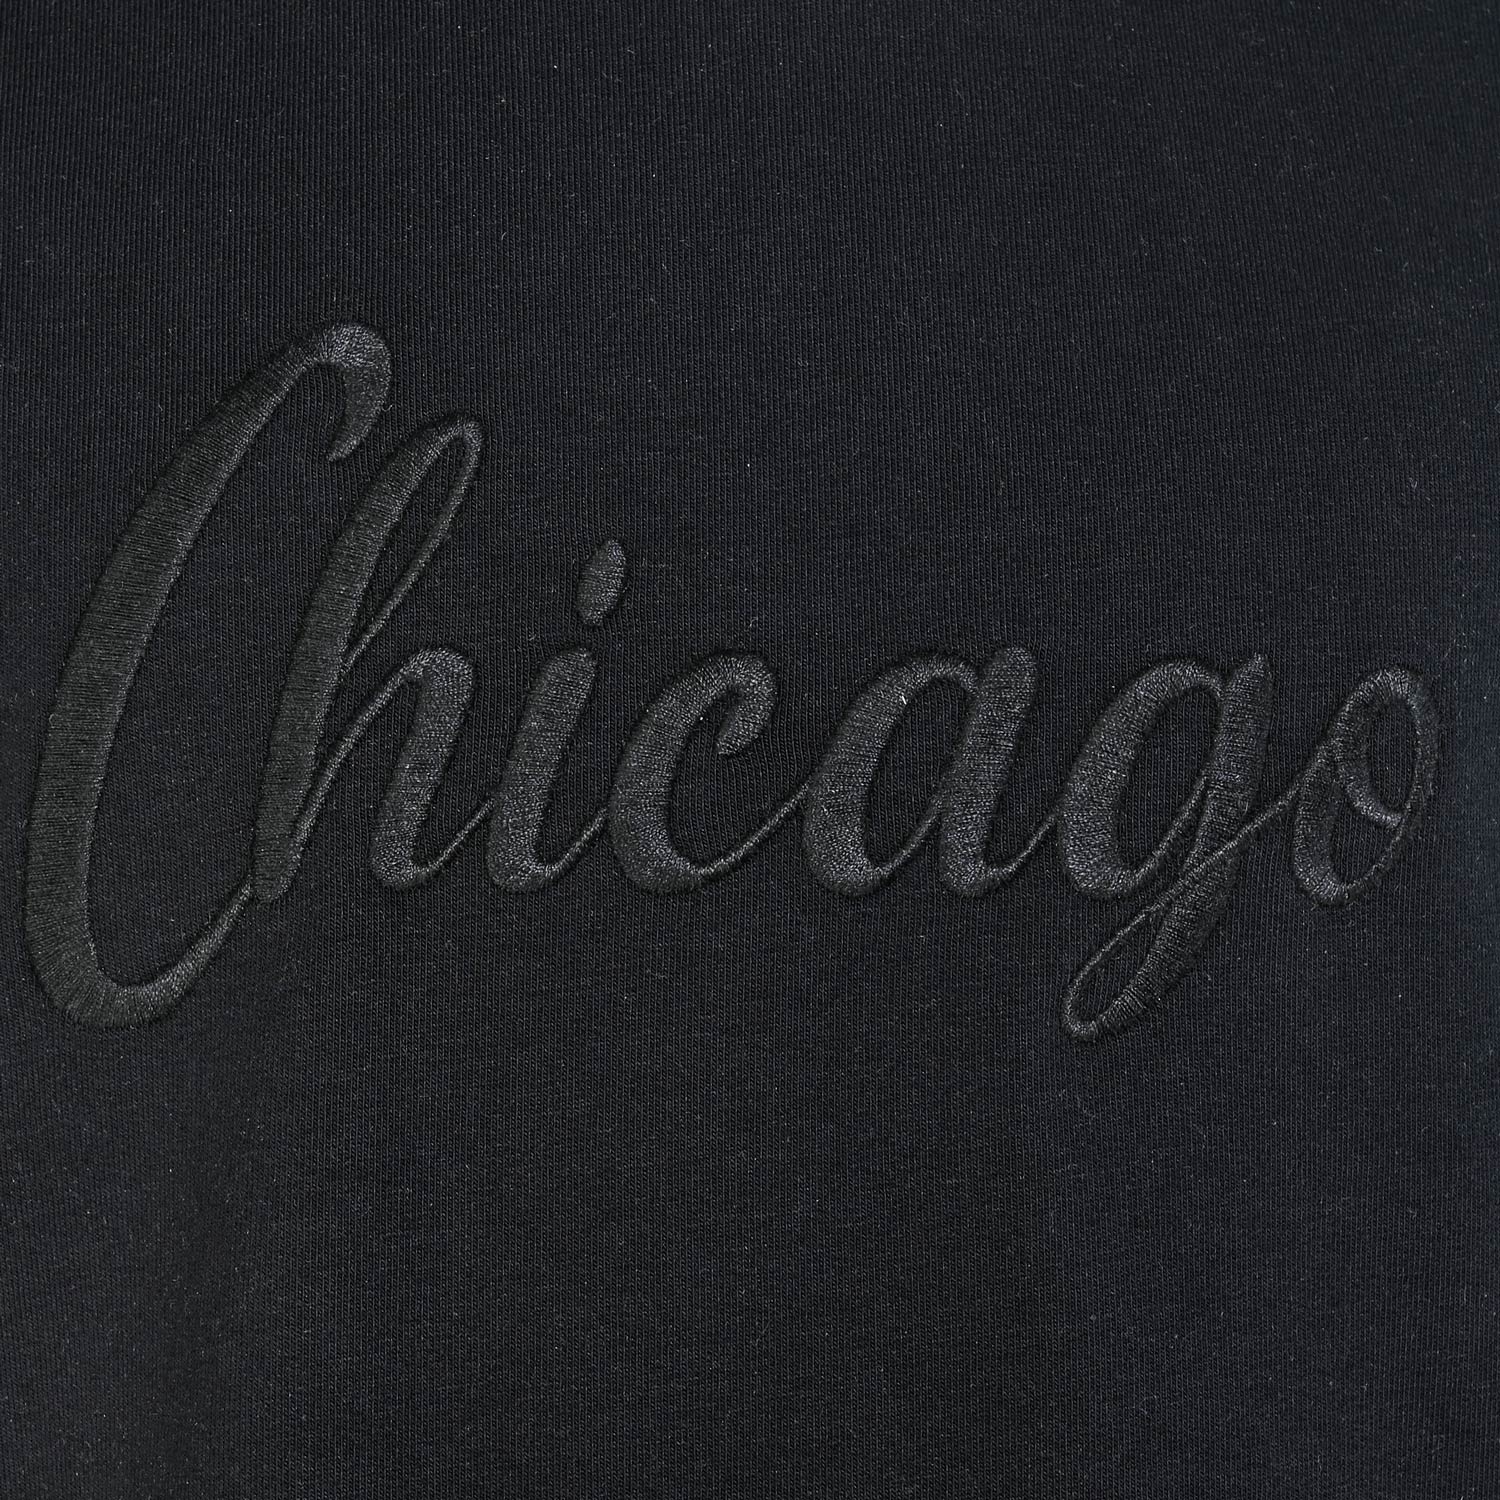 5925-Girls Sweat Dress -Chicago